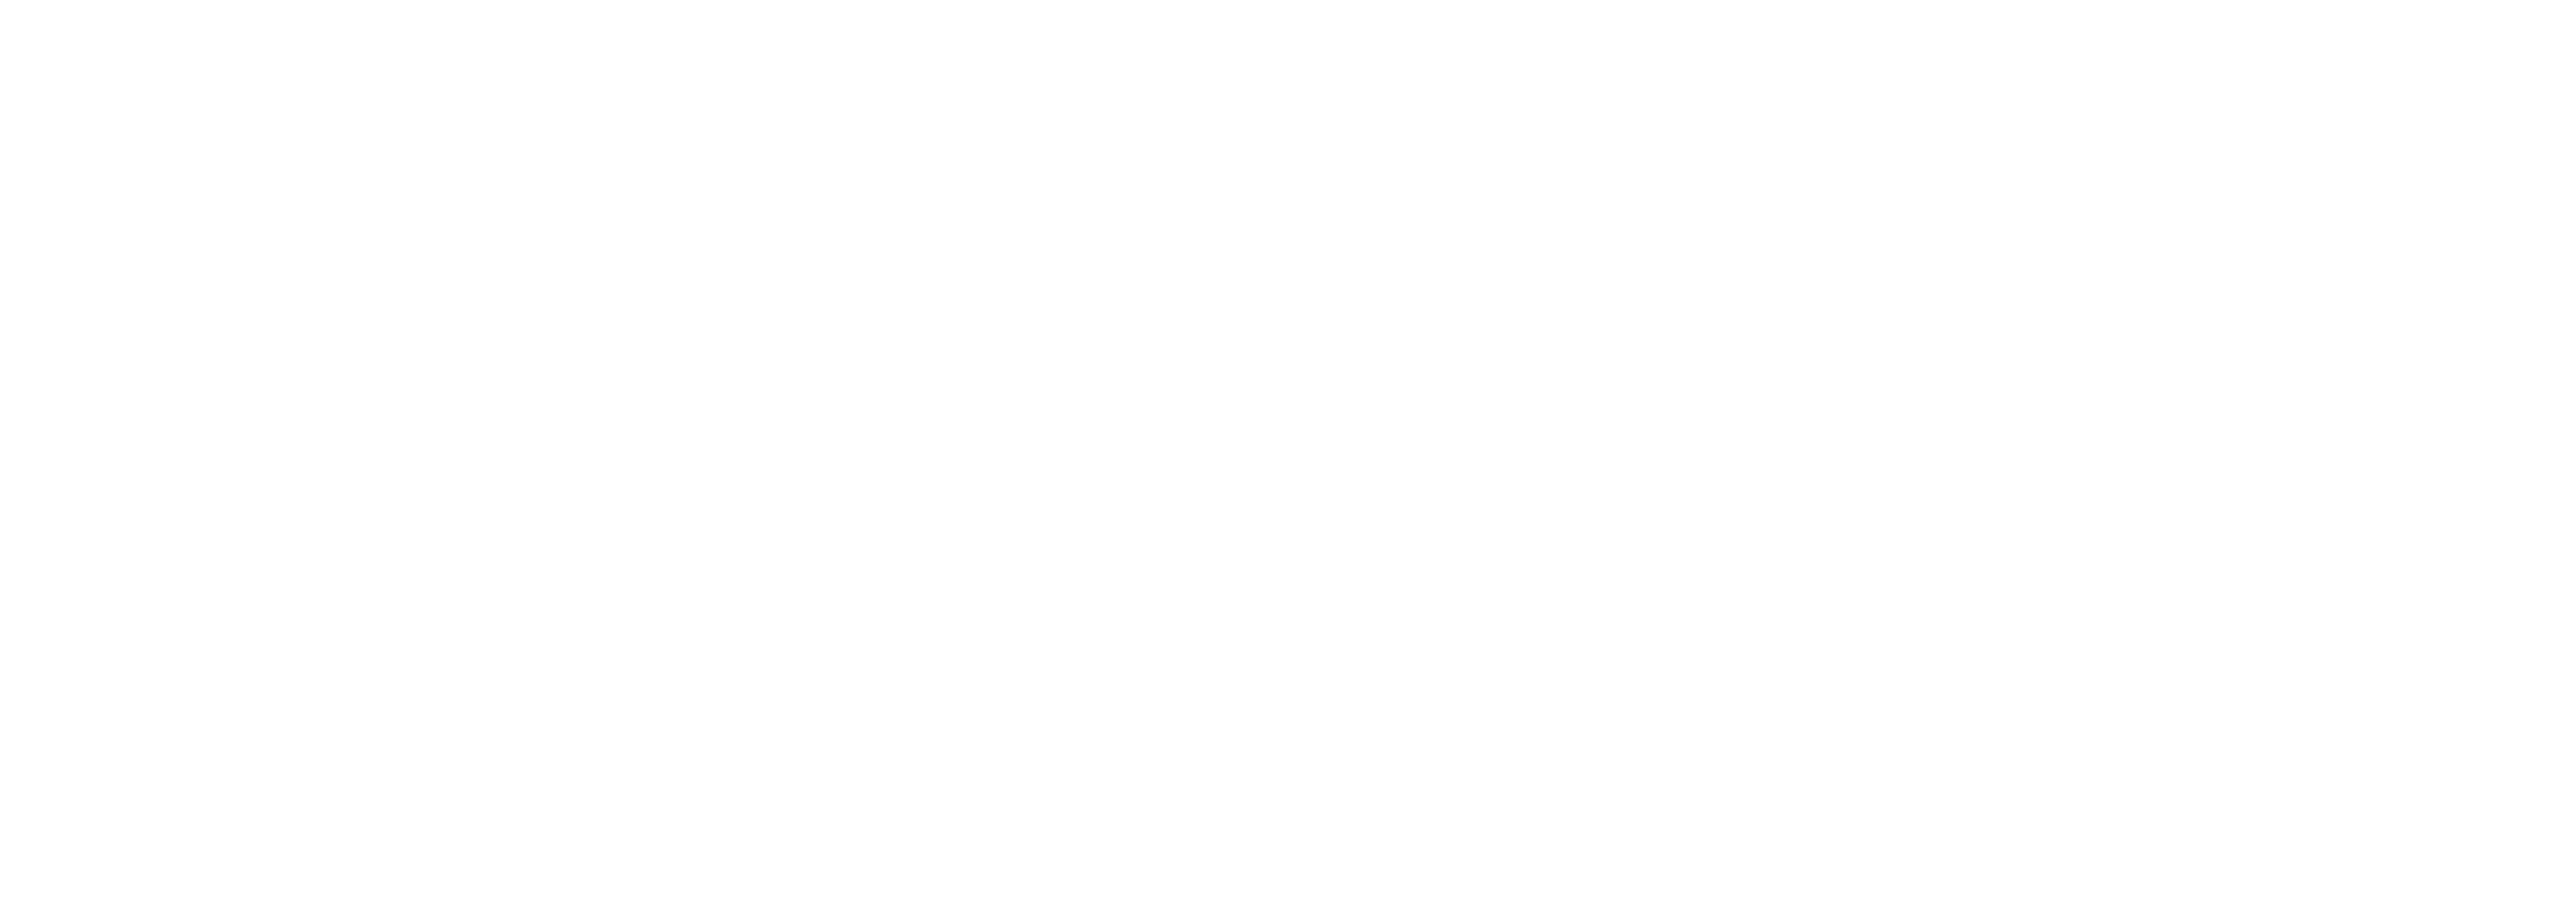 duurj banner and logo